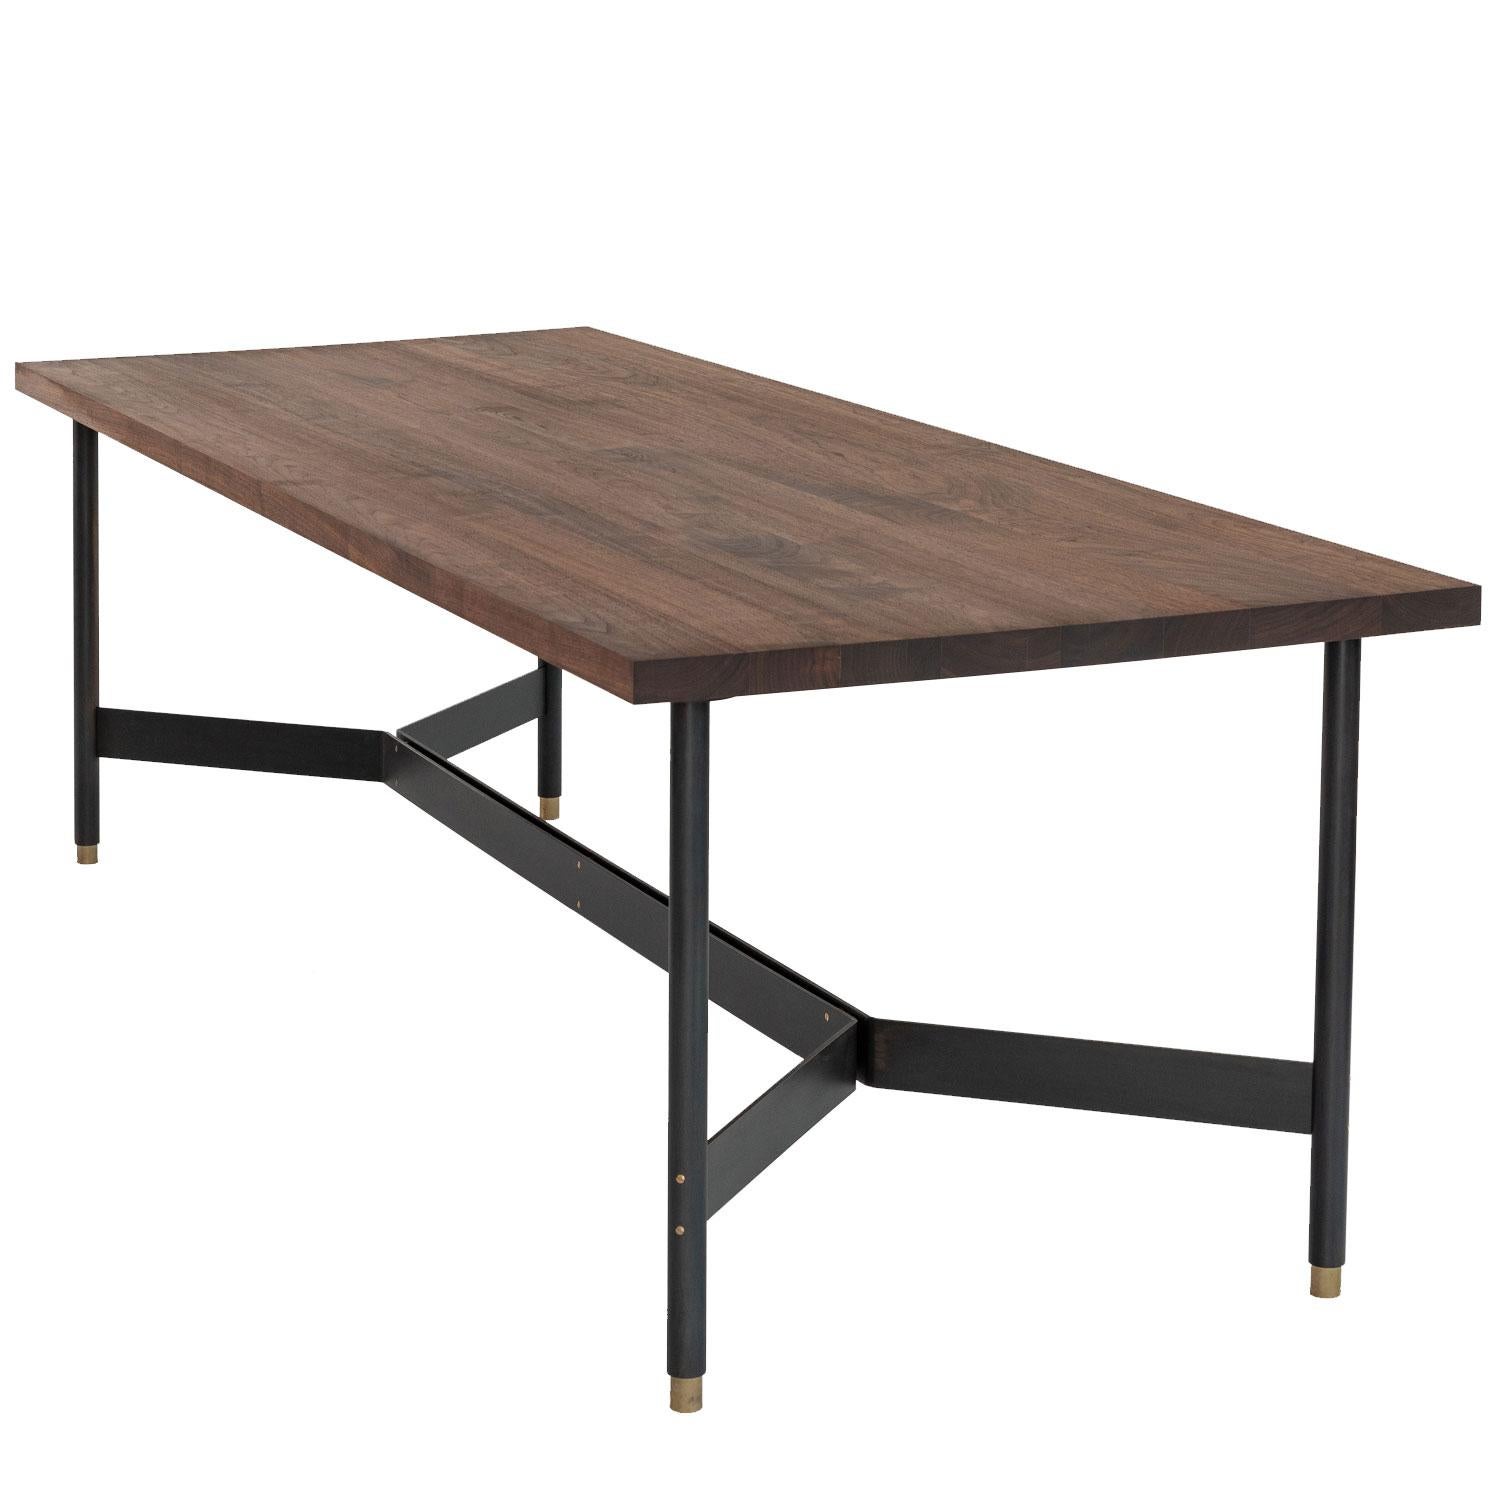 AT11, Handmade Solid Walnut & Blackened Steel Dining Table, Work Table, Desk